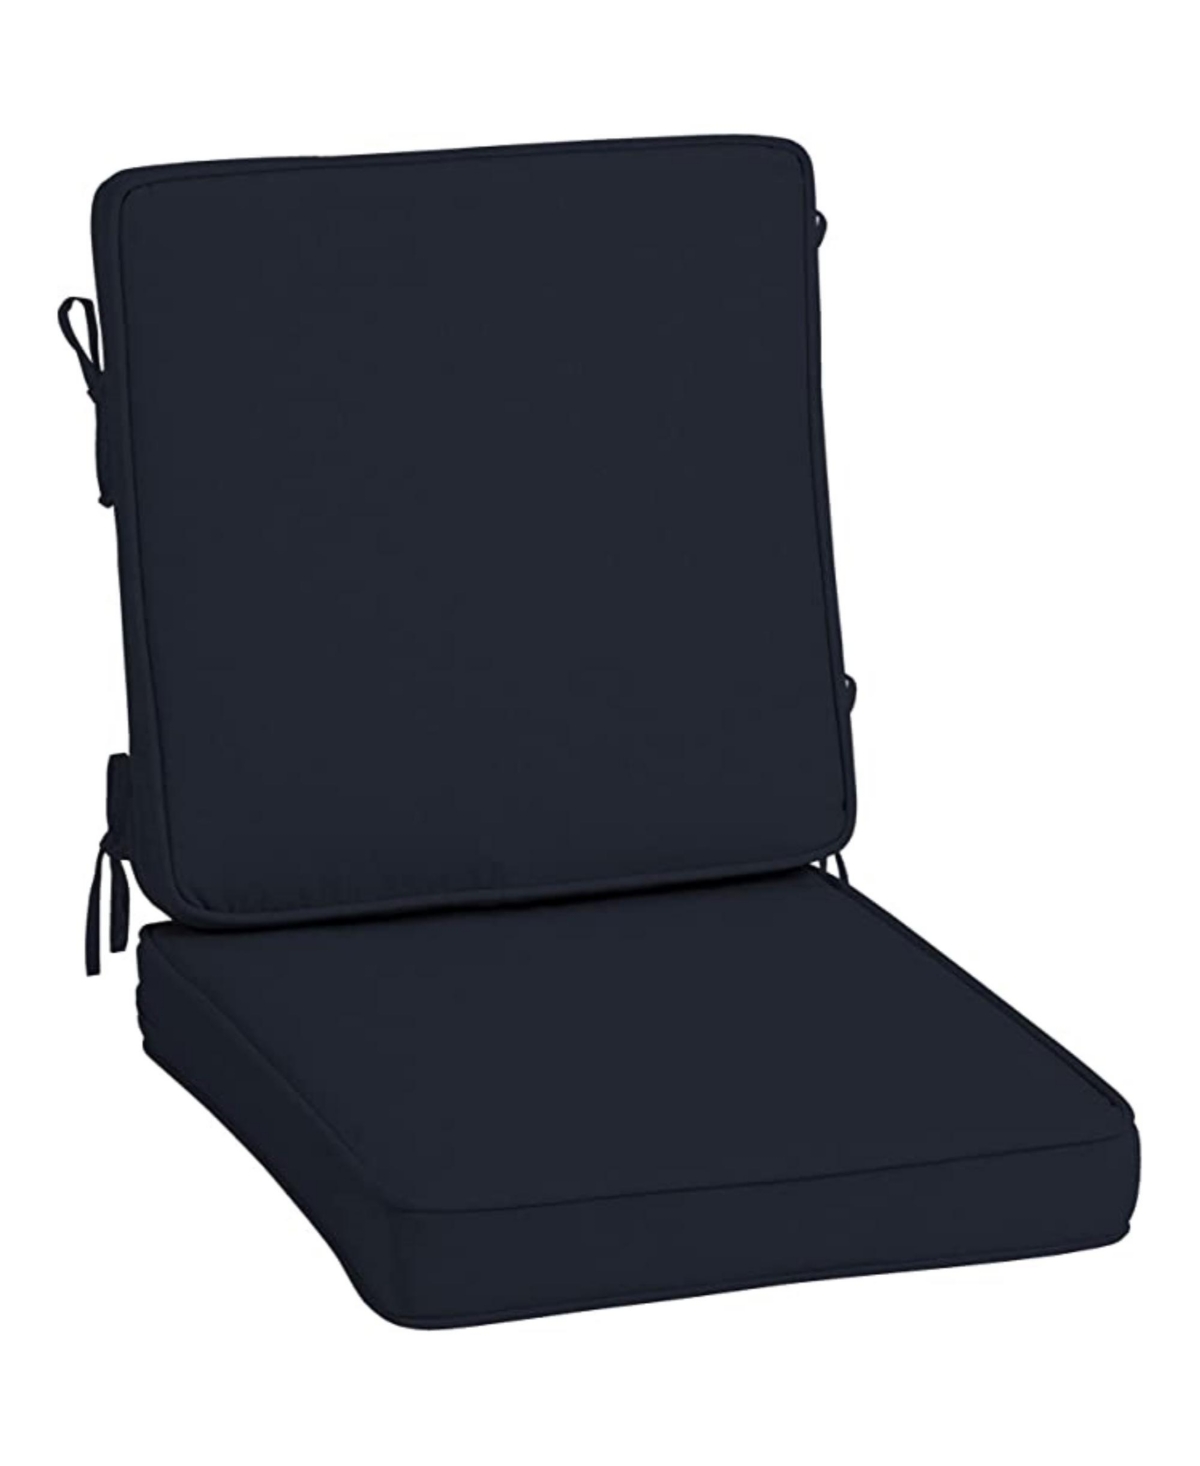 Acrylic Foam Chair Cushion 20In x 20In Navy - Blue